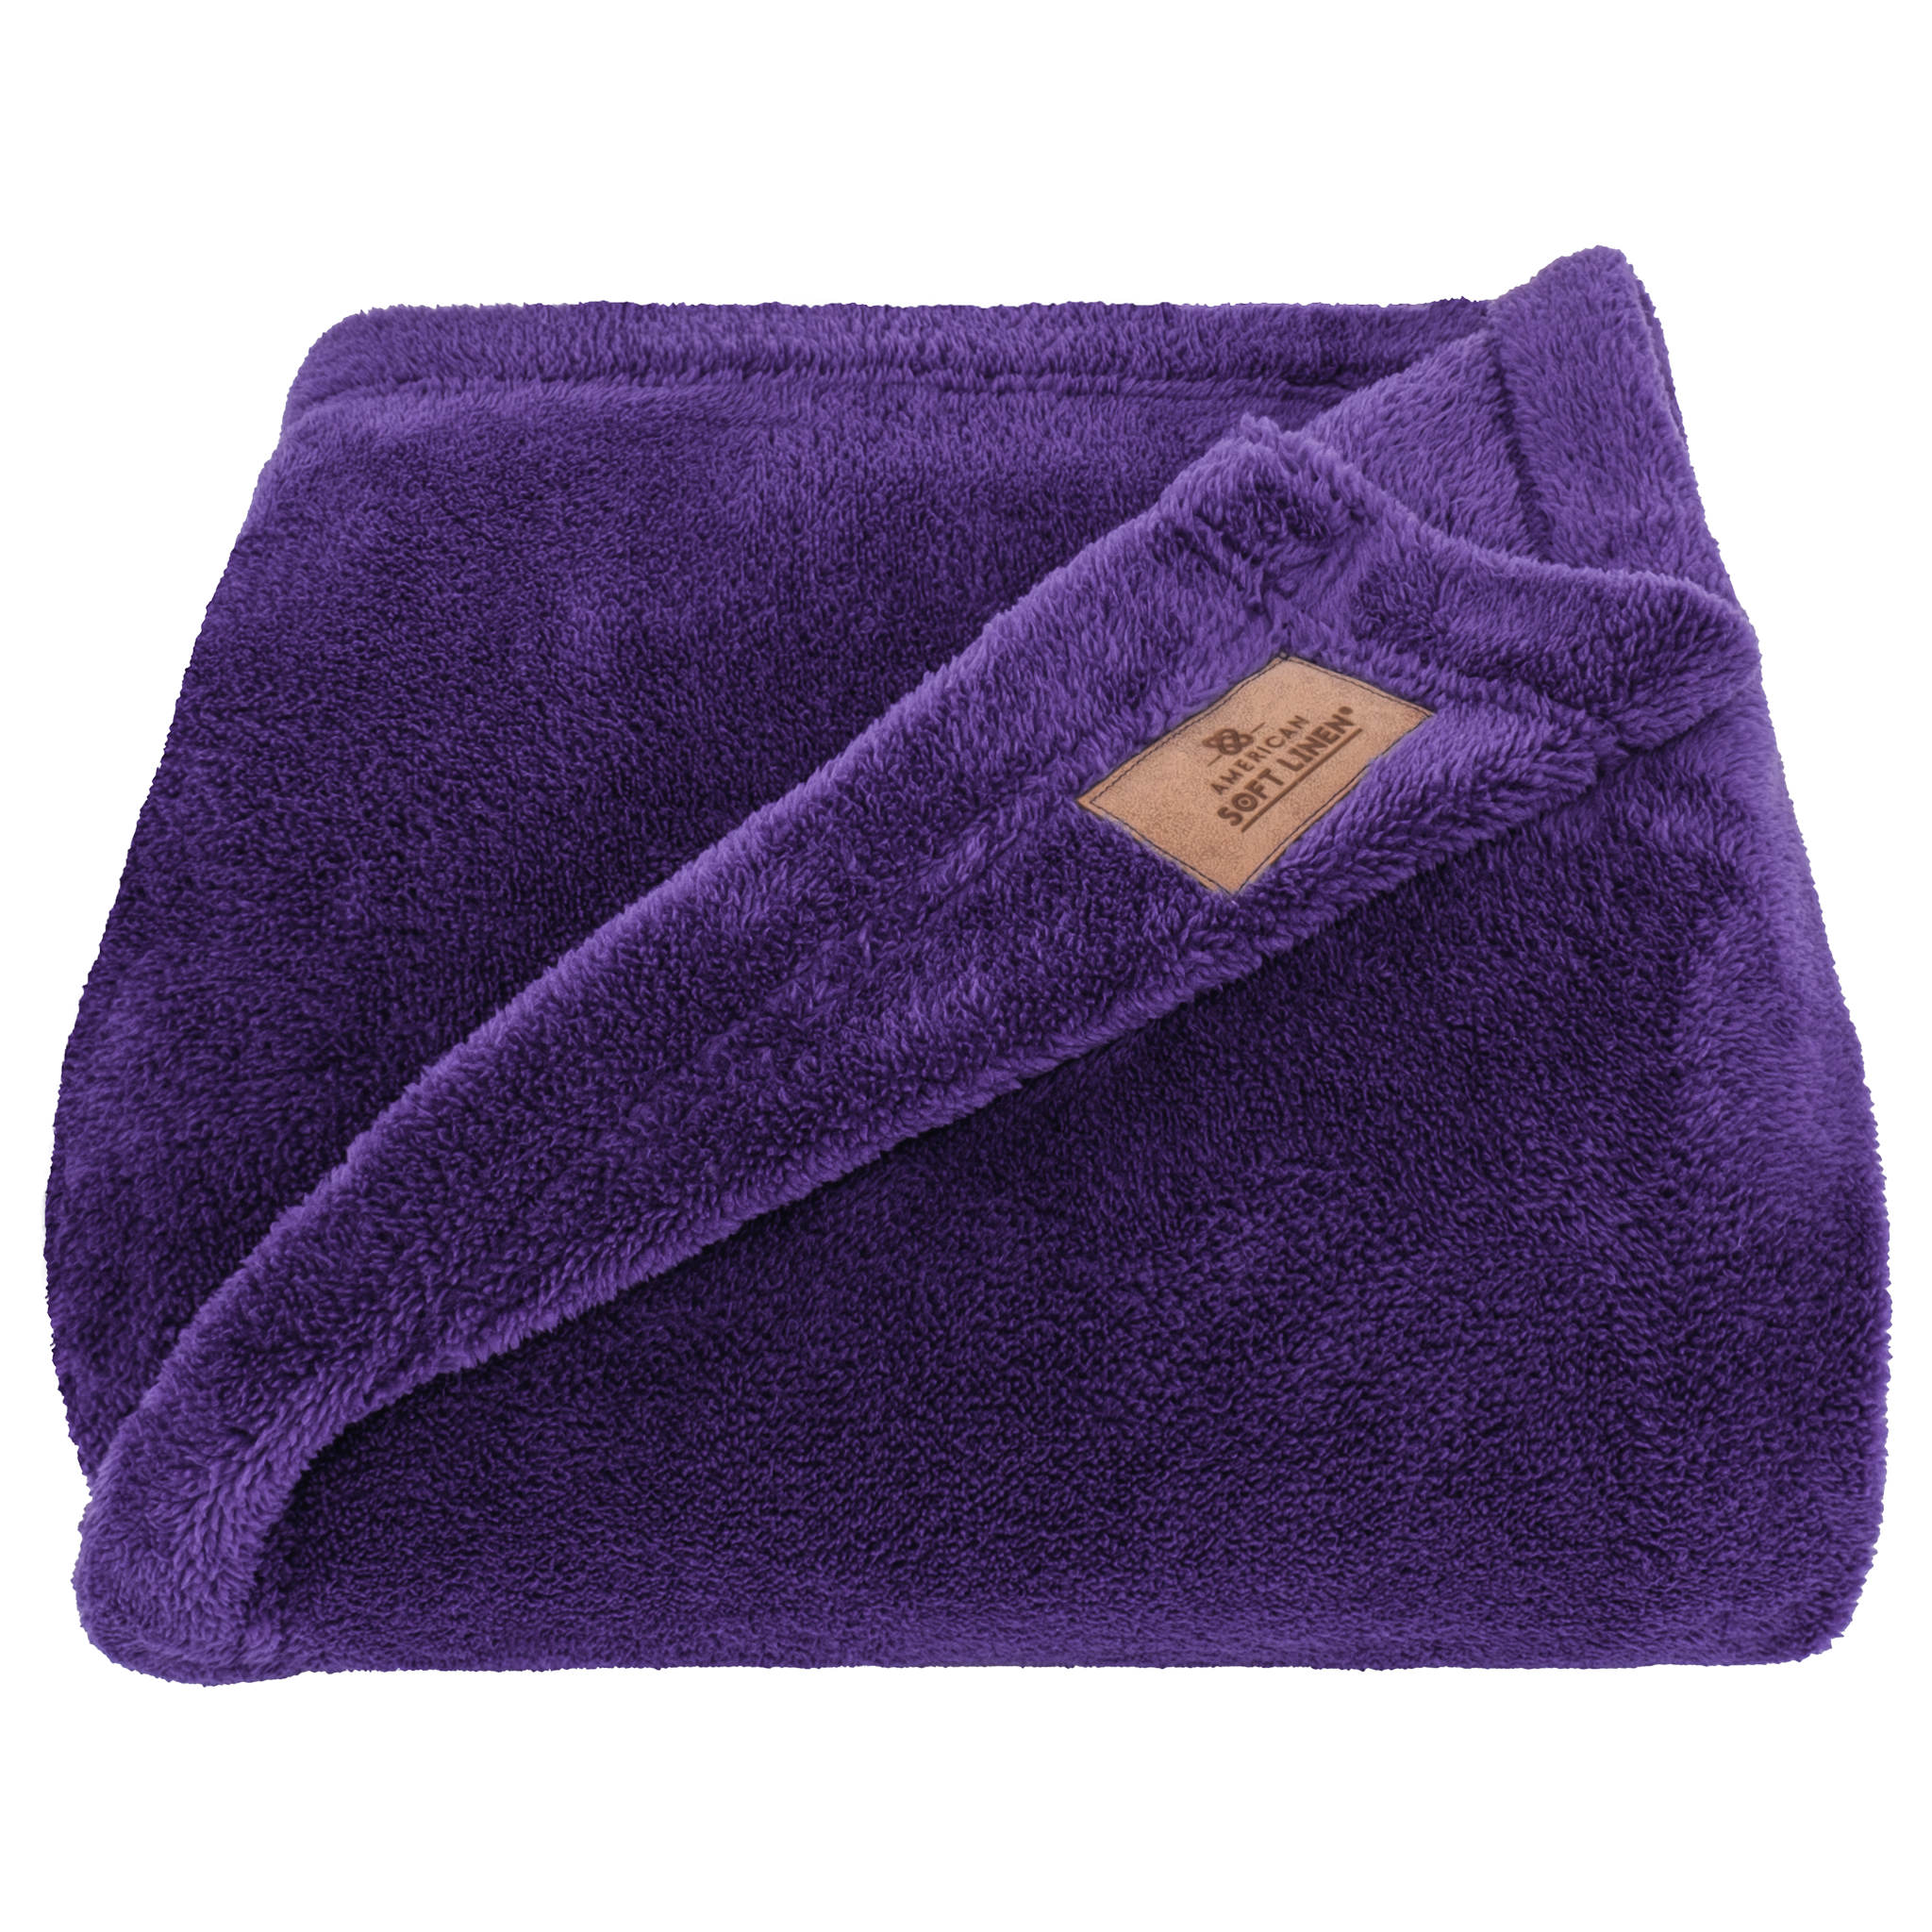 American Soft Linen - Bedding Fleece Blanket - Wholesale - 15 Set Case Pack - Twin Size 60x80 inches - Purple - 3